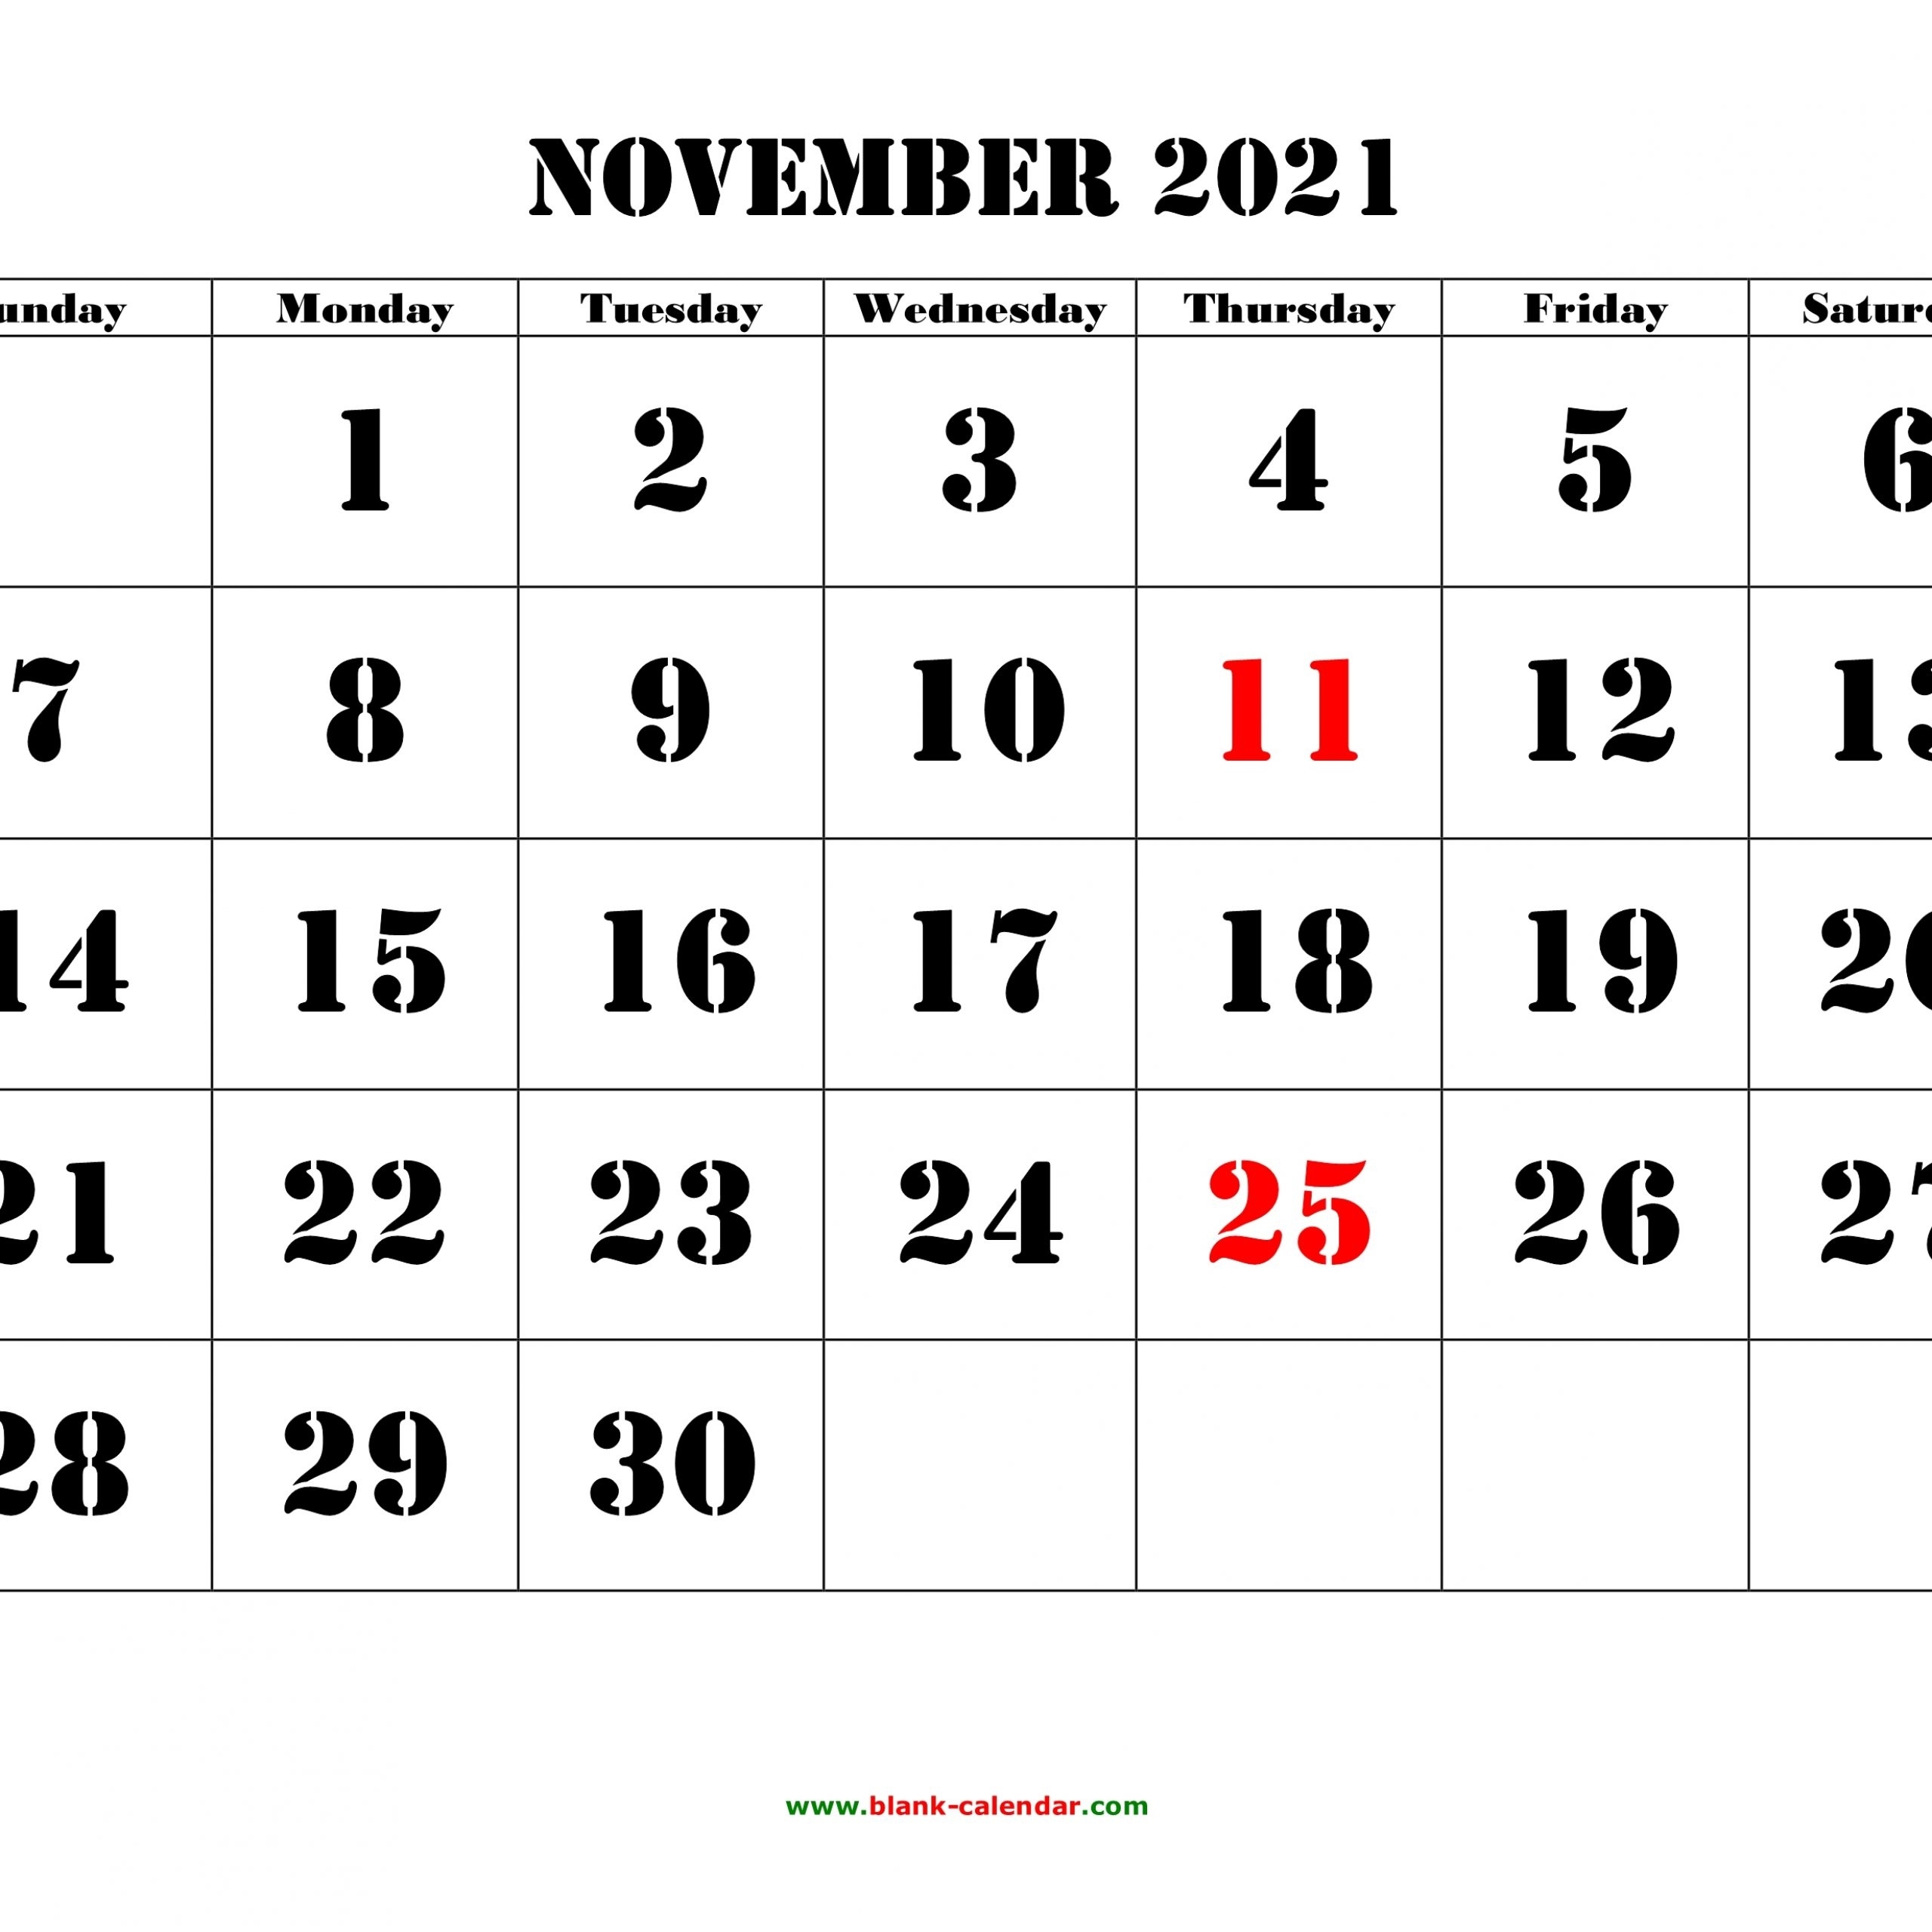 November 2021 Calendar Printable Large | Free Printable Calendar November 2021 In Hijri Calendar